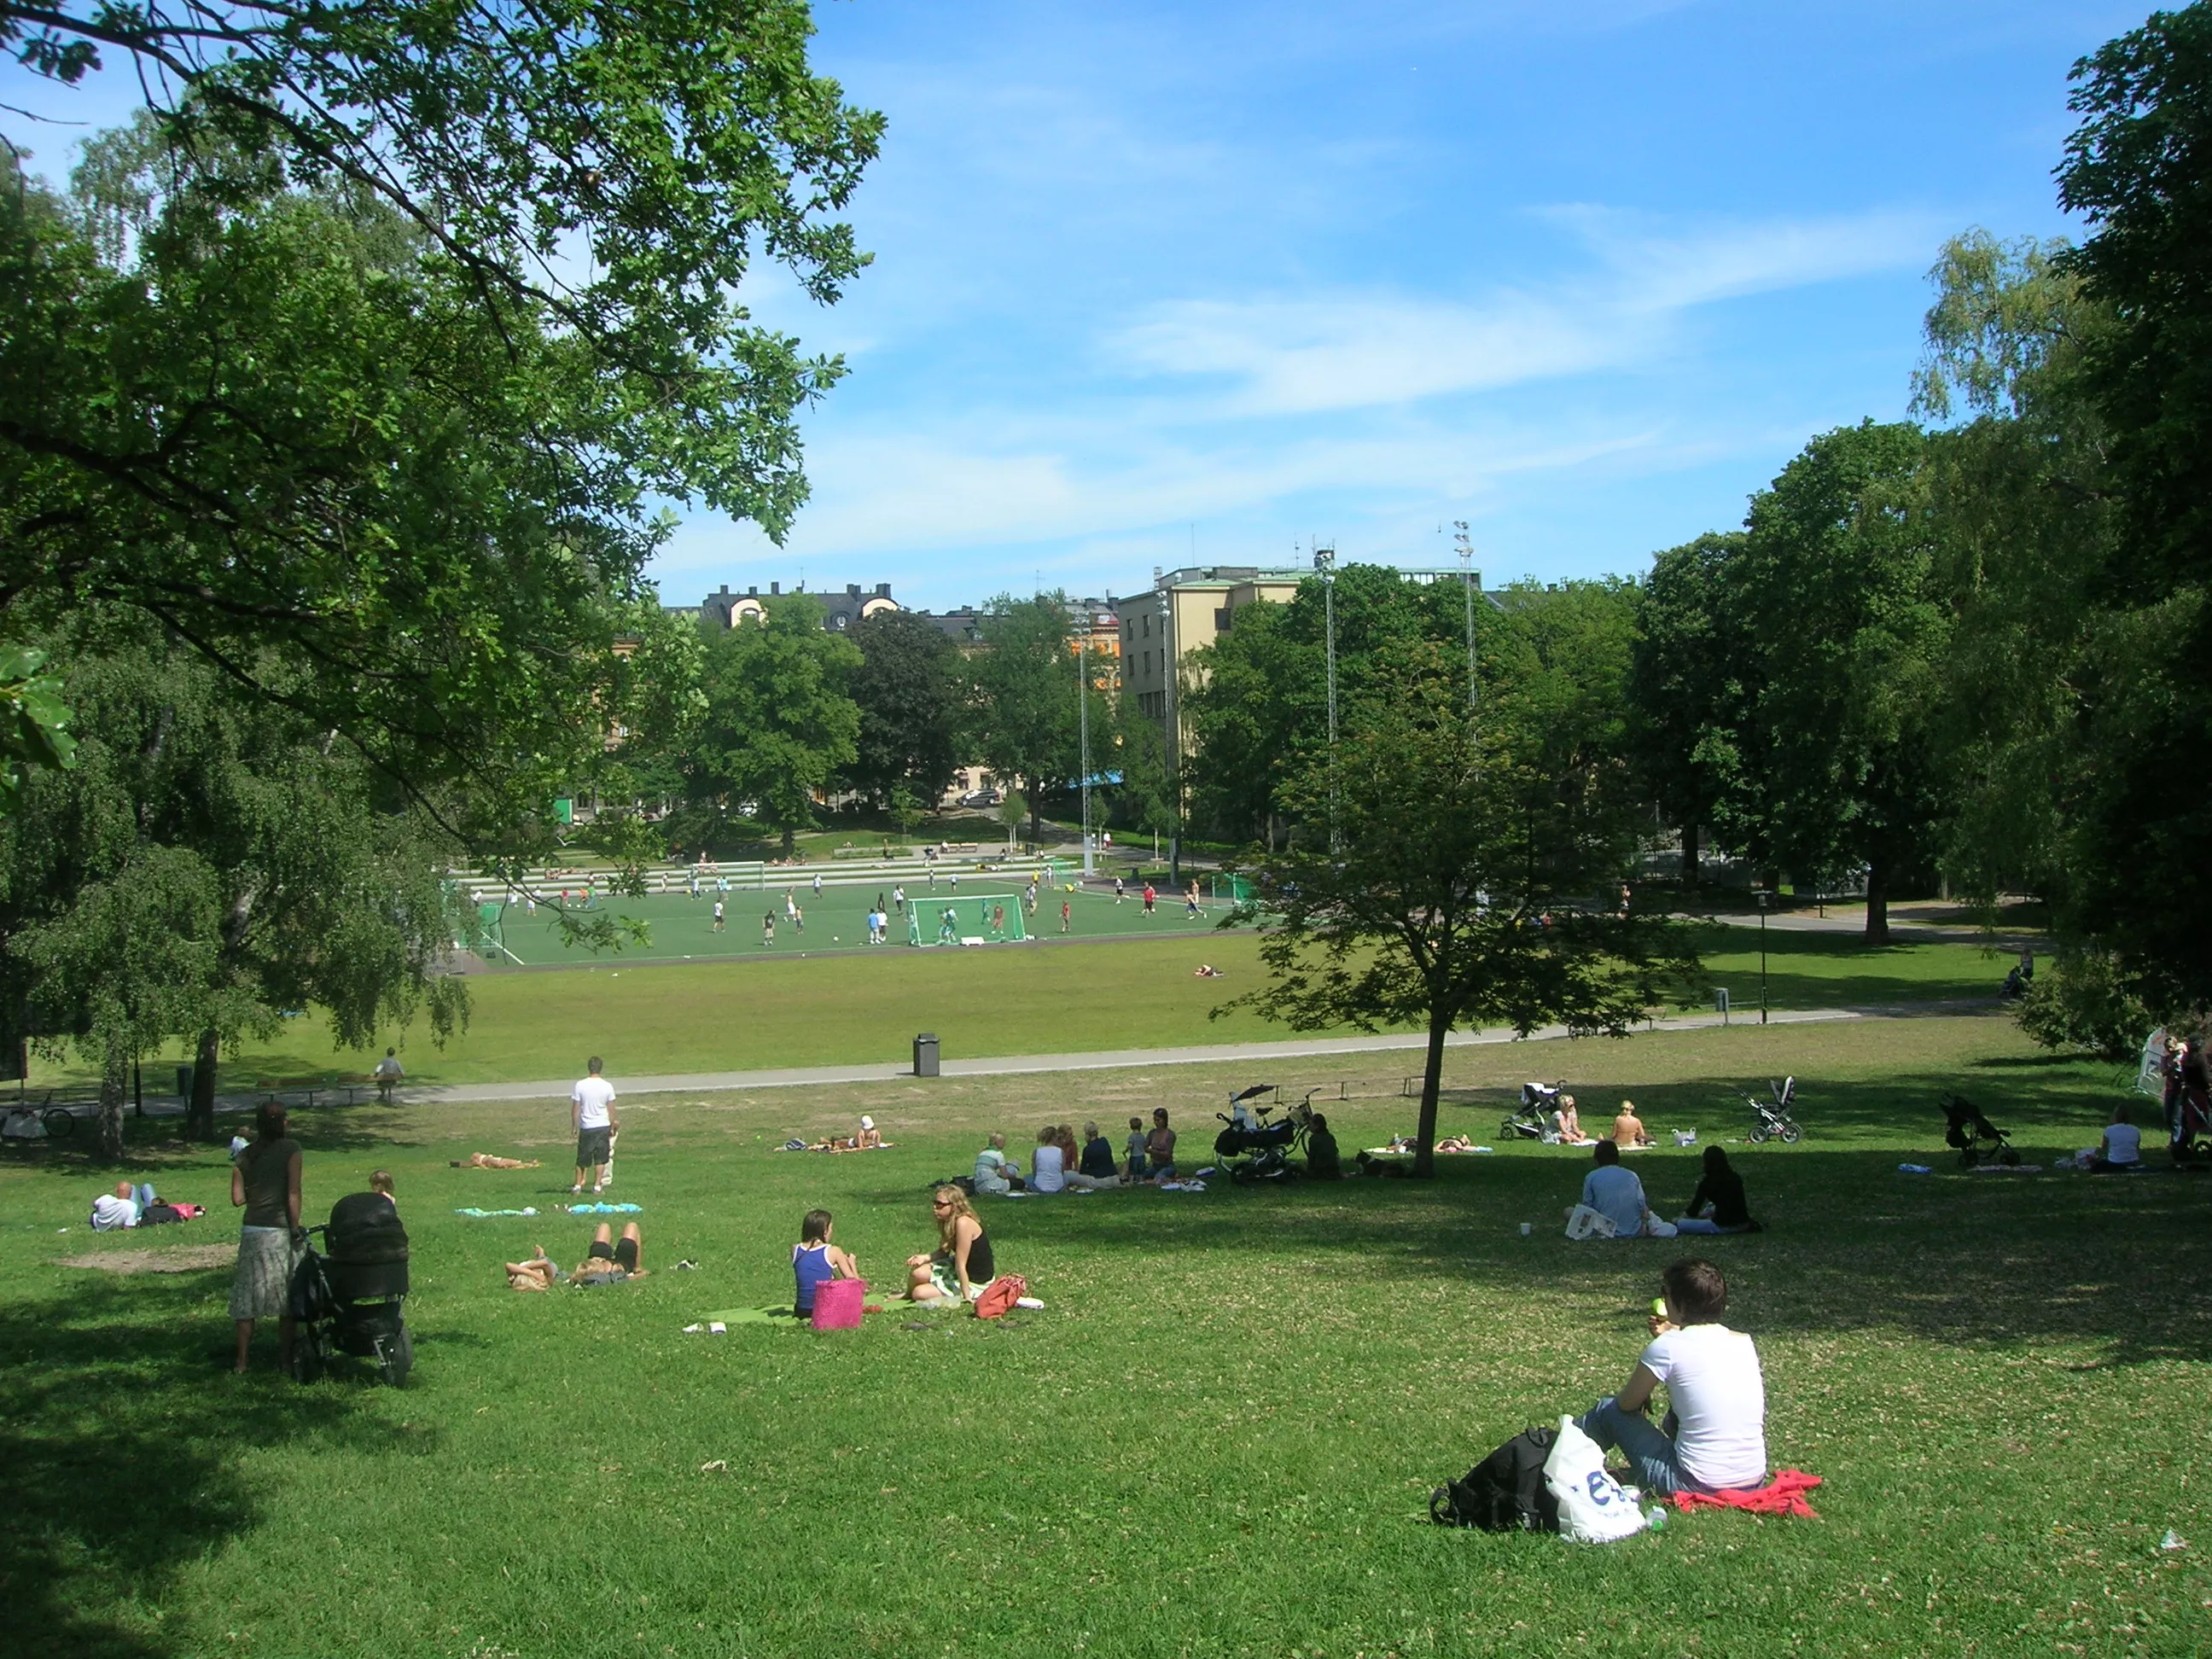 Vasaparken in Sweden, Europe | Parks - Rated 3.6